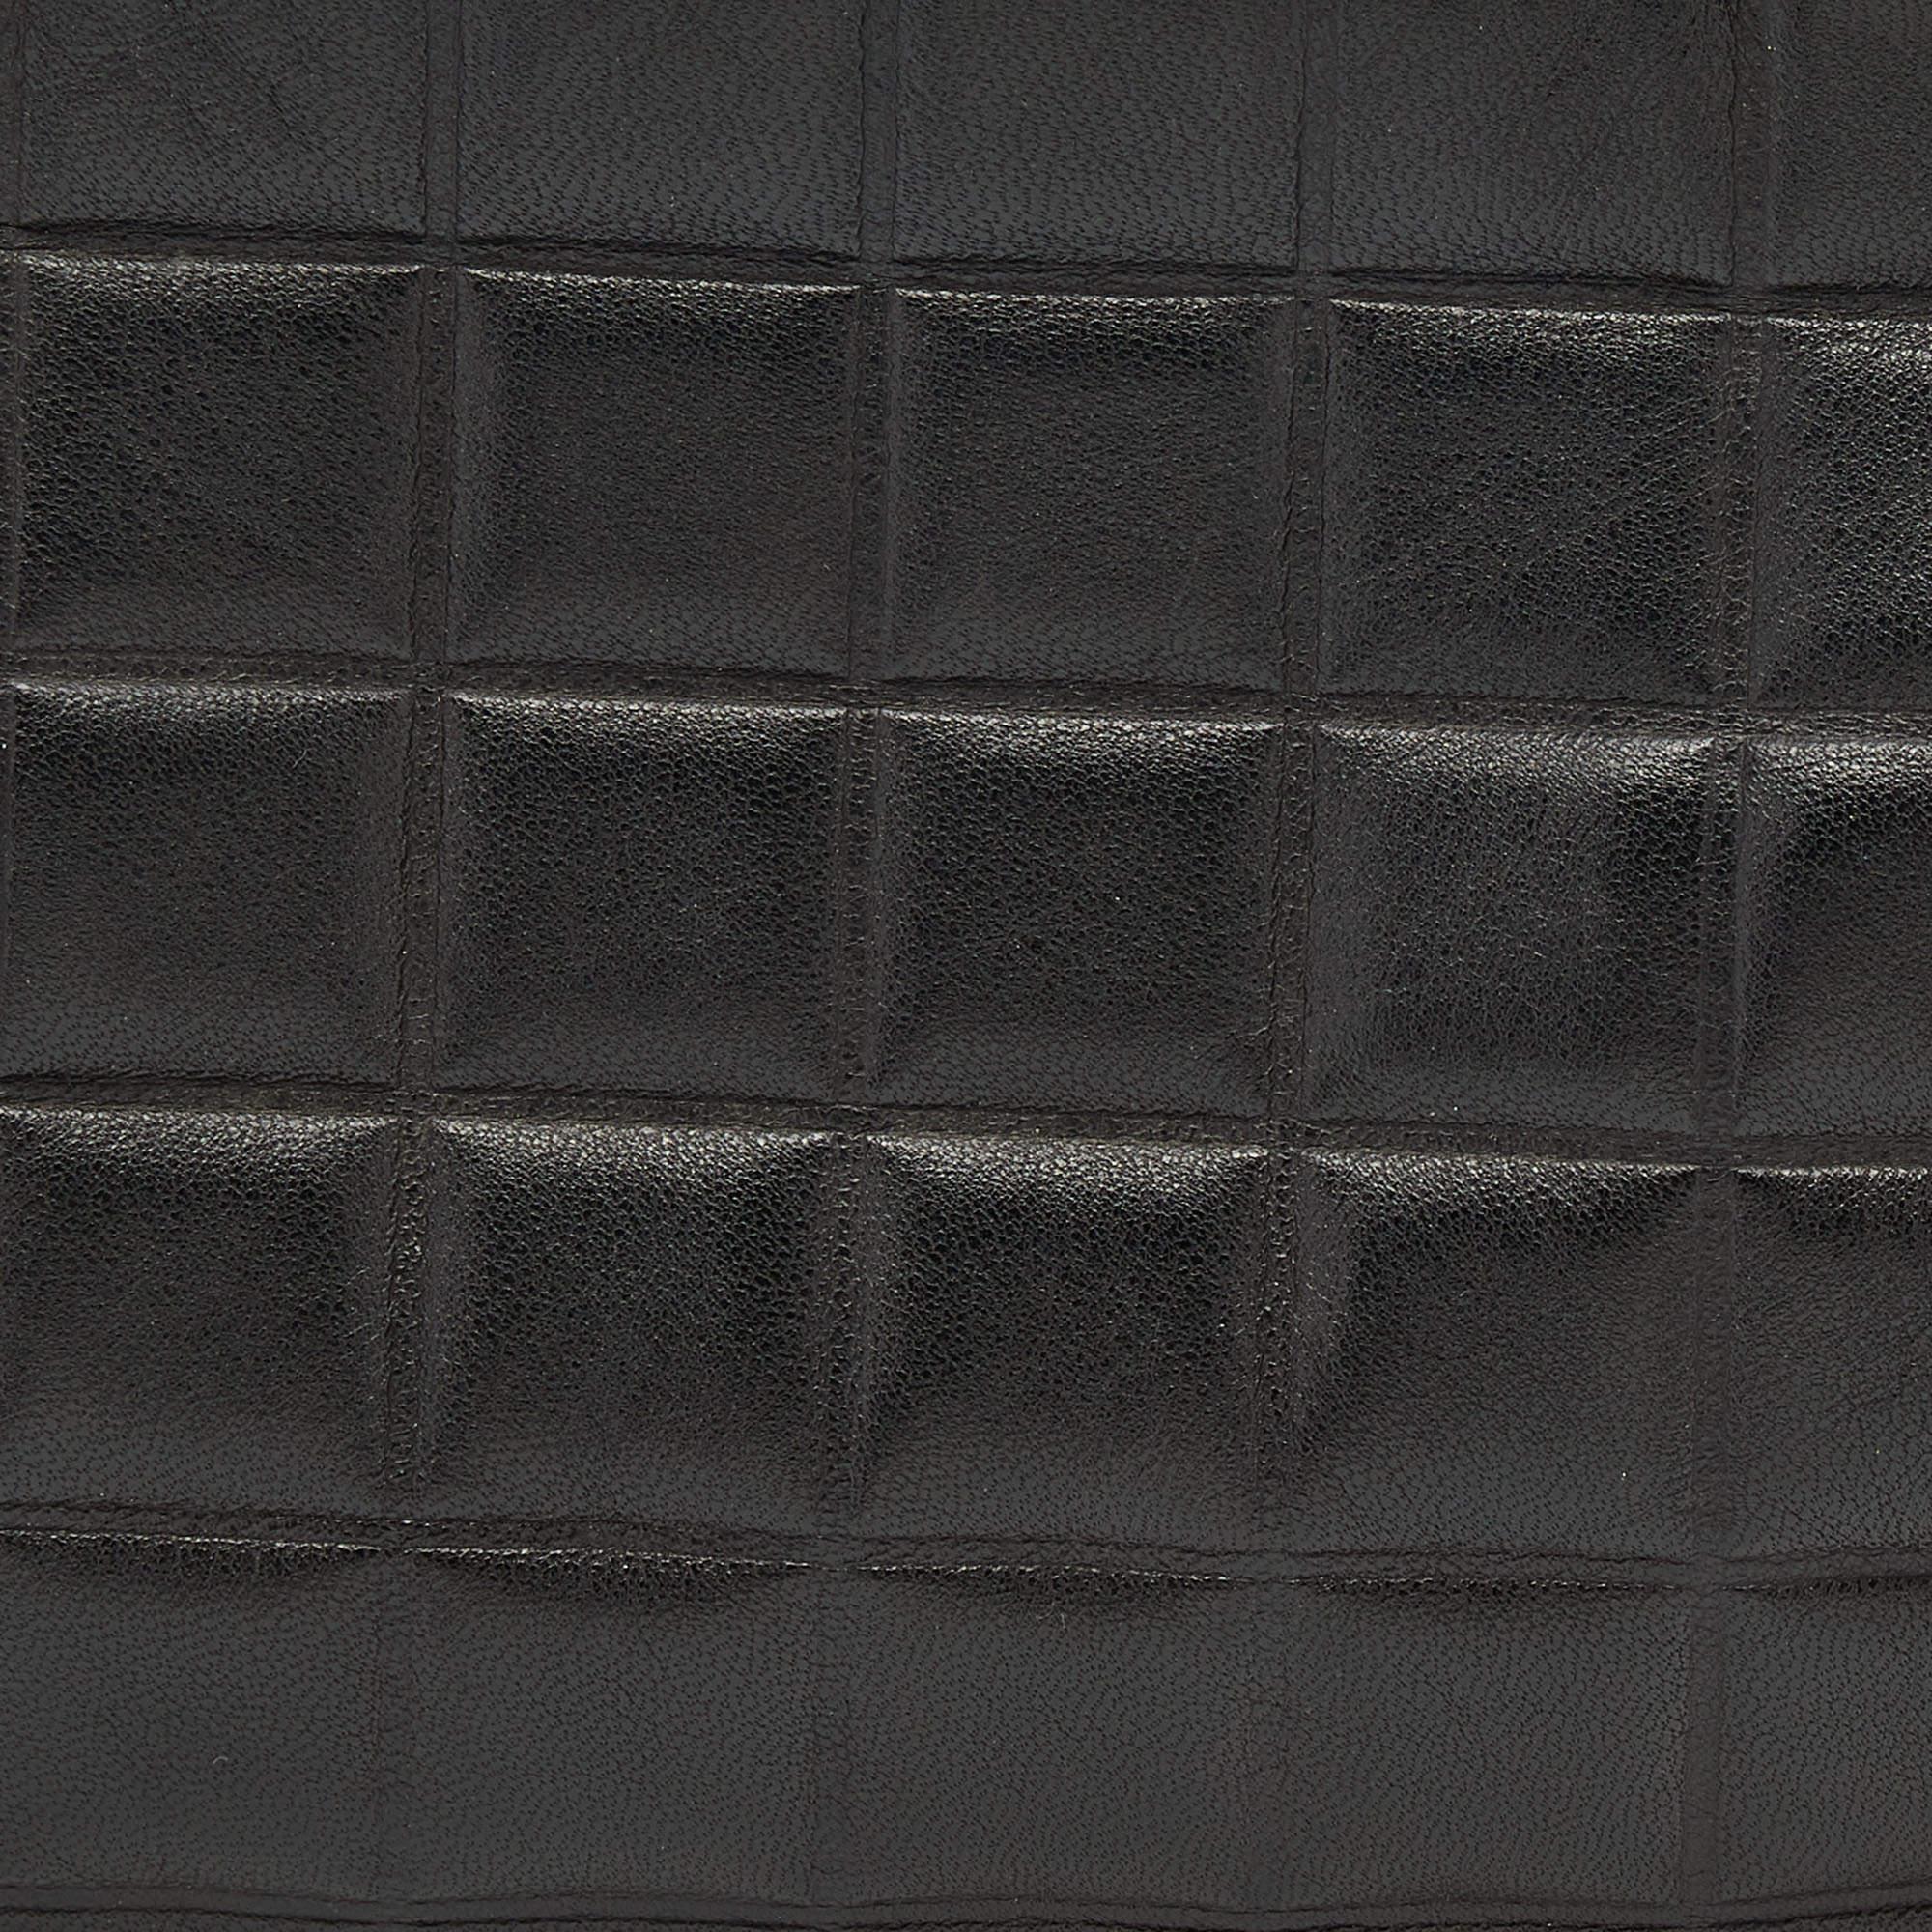 Chanel Black Leather Chocolate Bar Barrel Bag 3